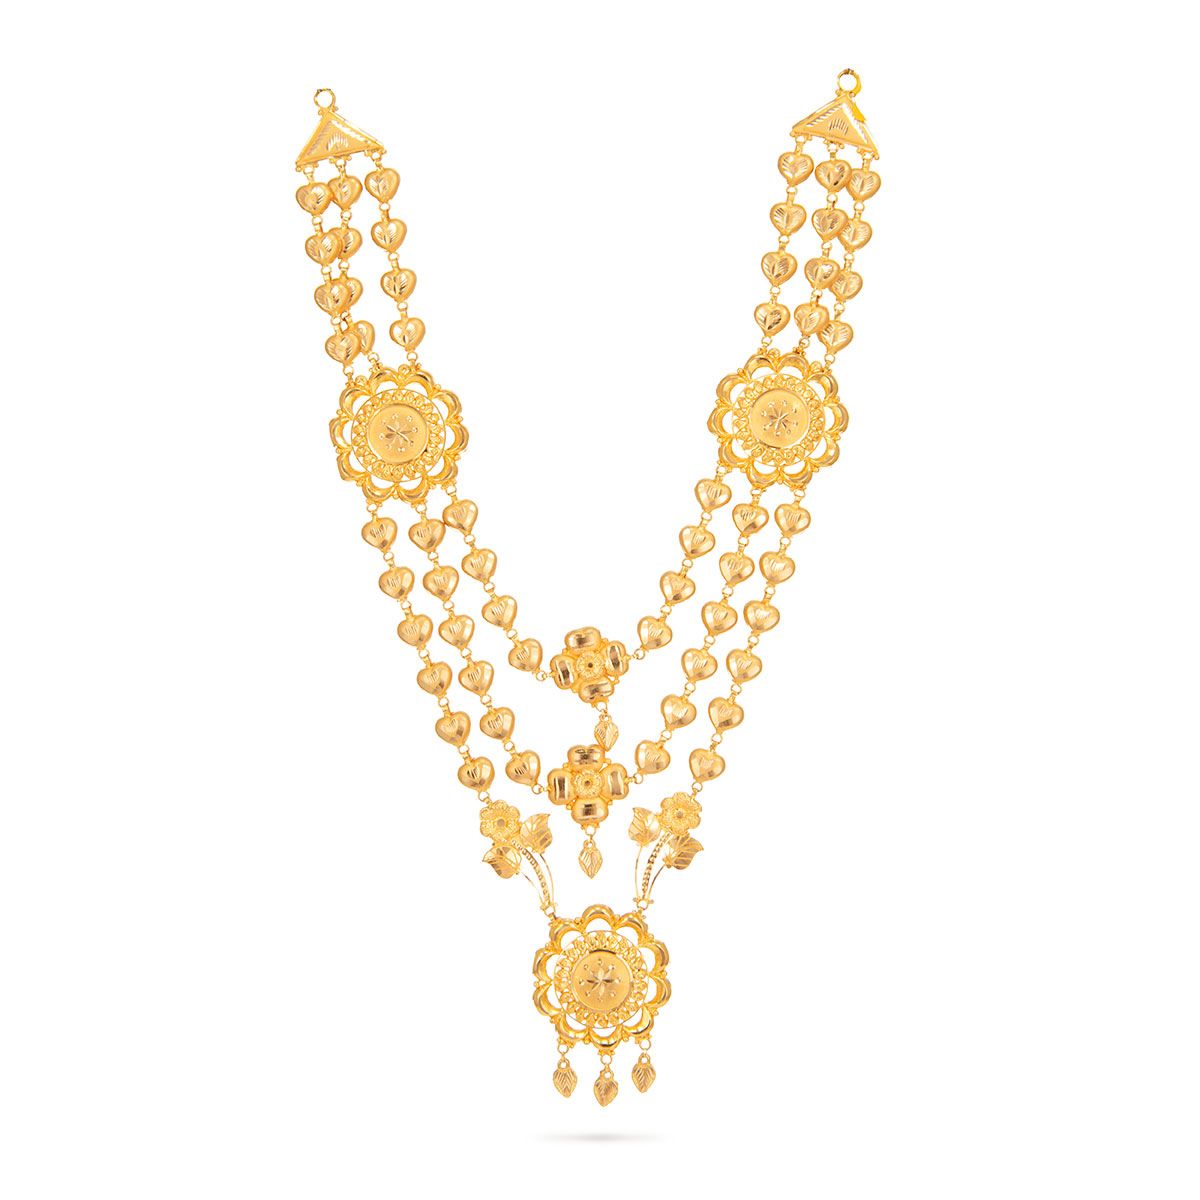 SGA 22 Karat 22kt Gold Necklace, 350 Gram at Rs 2450000/piece in Jaipur |  ID: 24683277233